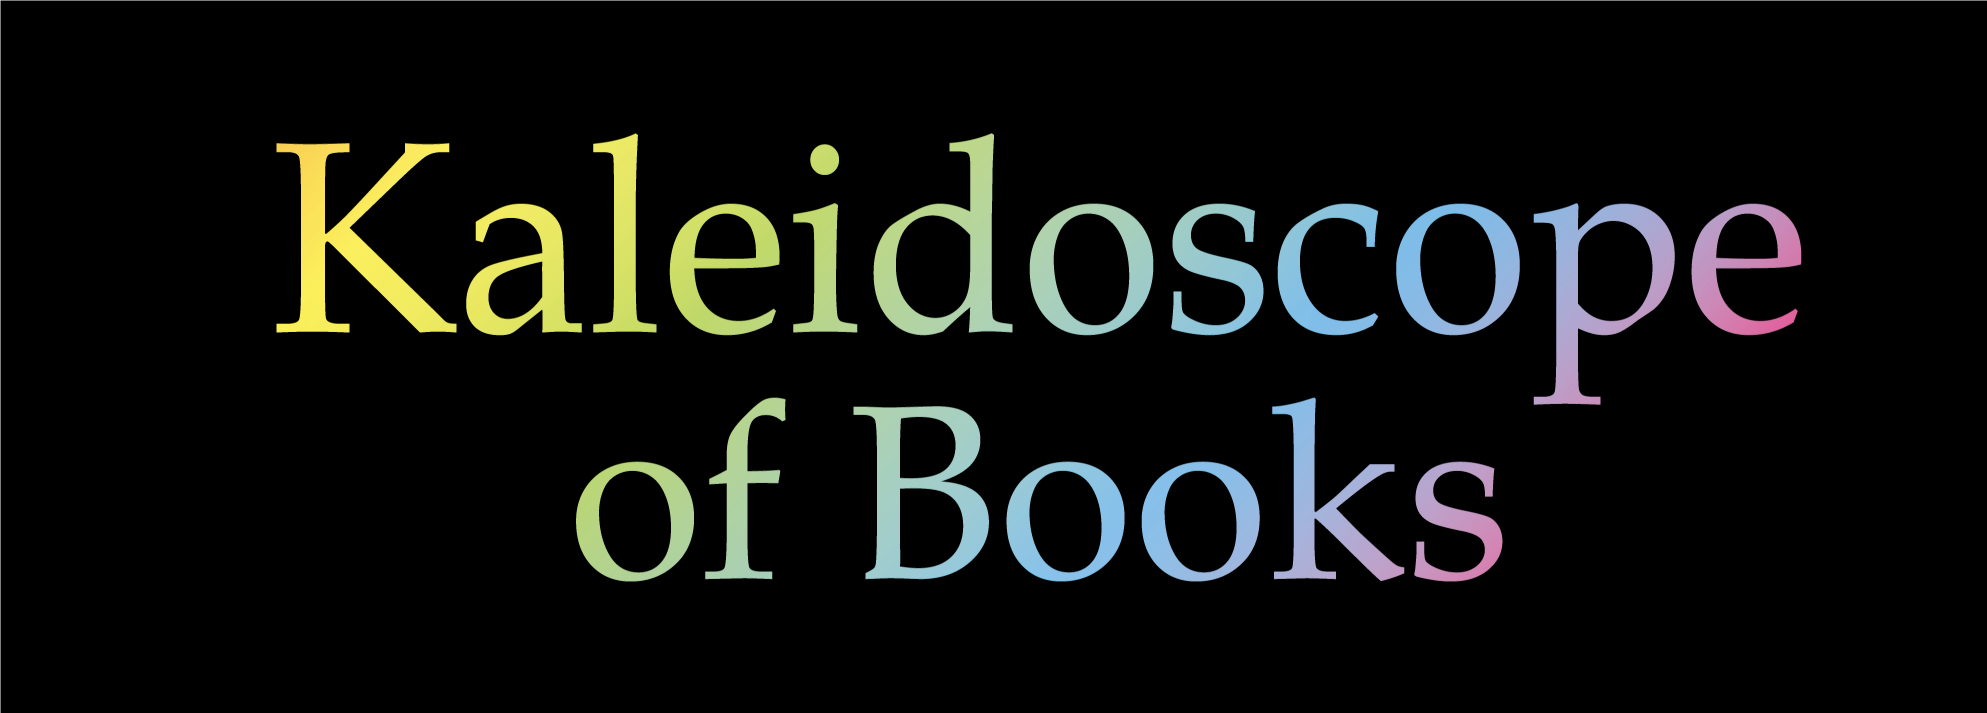 Kaleidoscope of Books